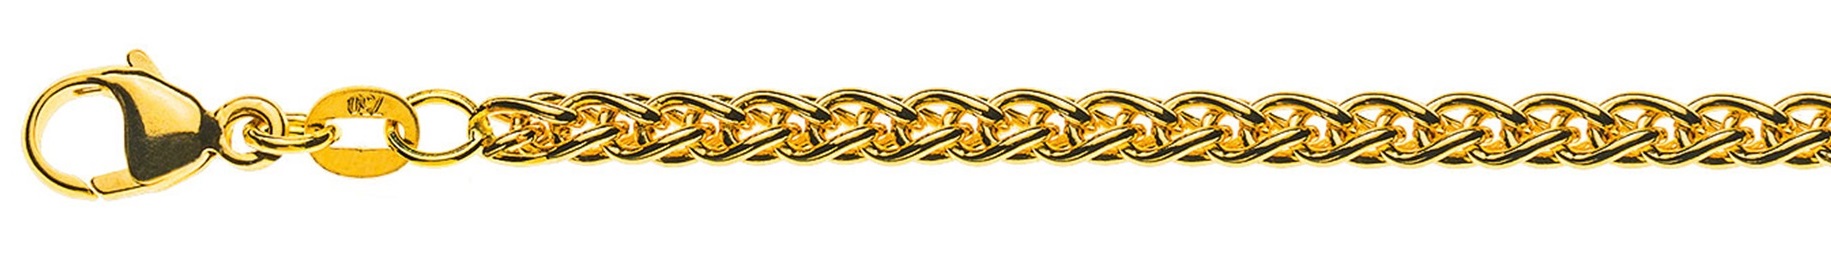 AURONOS Prestige Necklace yellow gold 18K cable chain 60cm 3.3mm